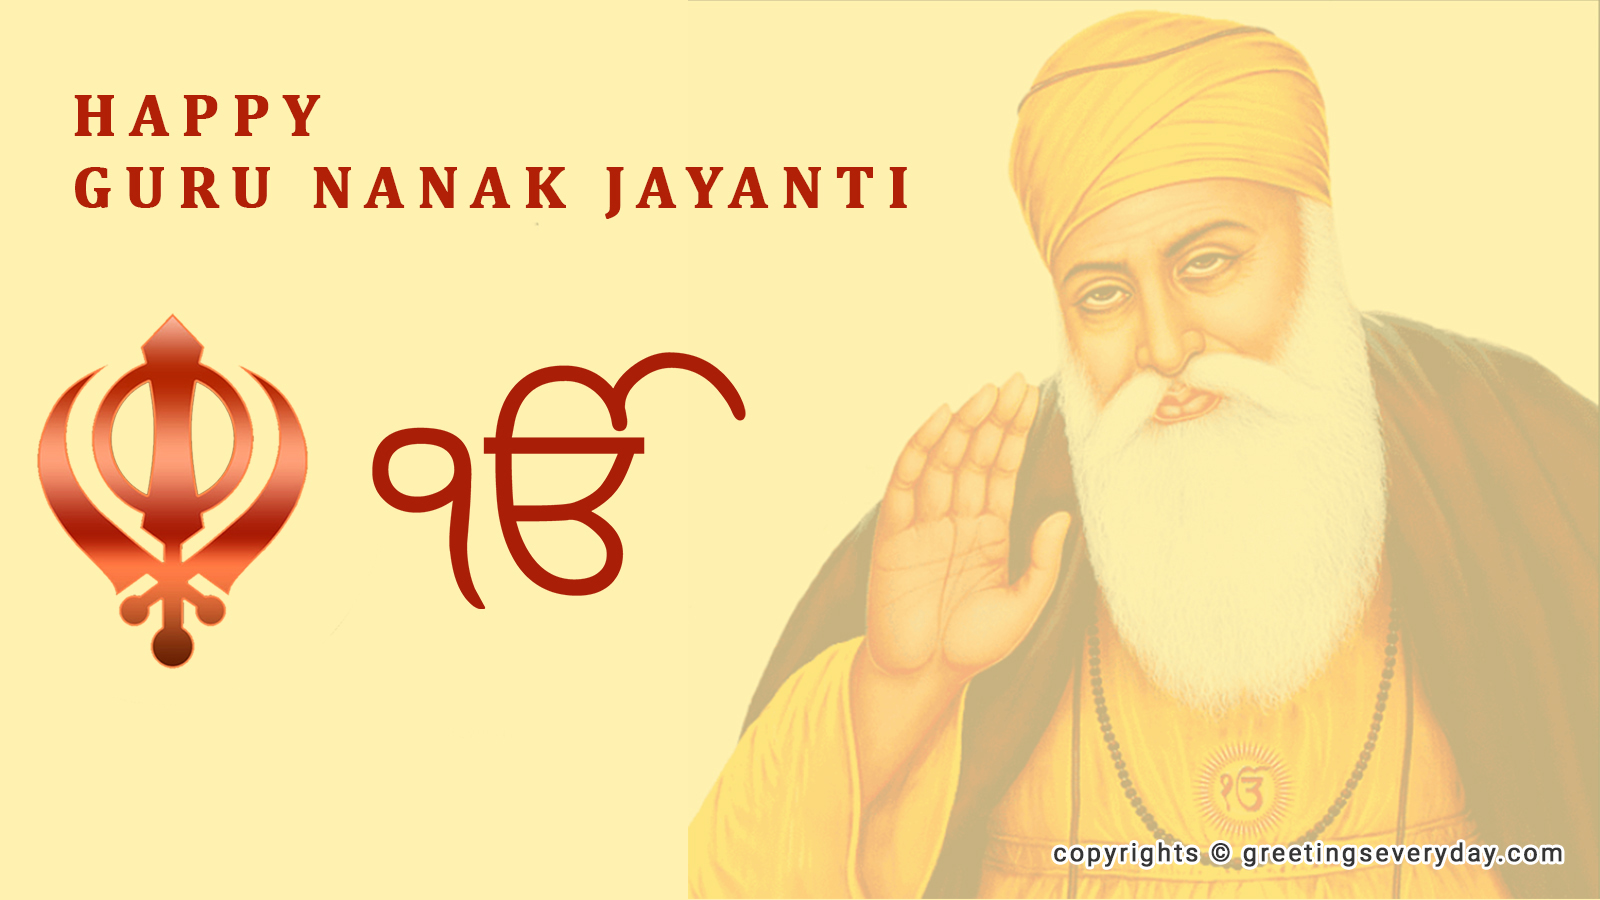 Guru Nanak Jayanti Facebook Cover Photo